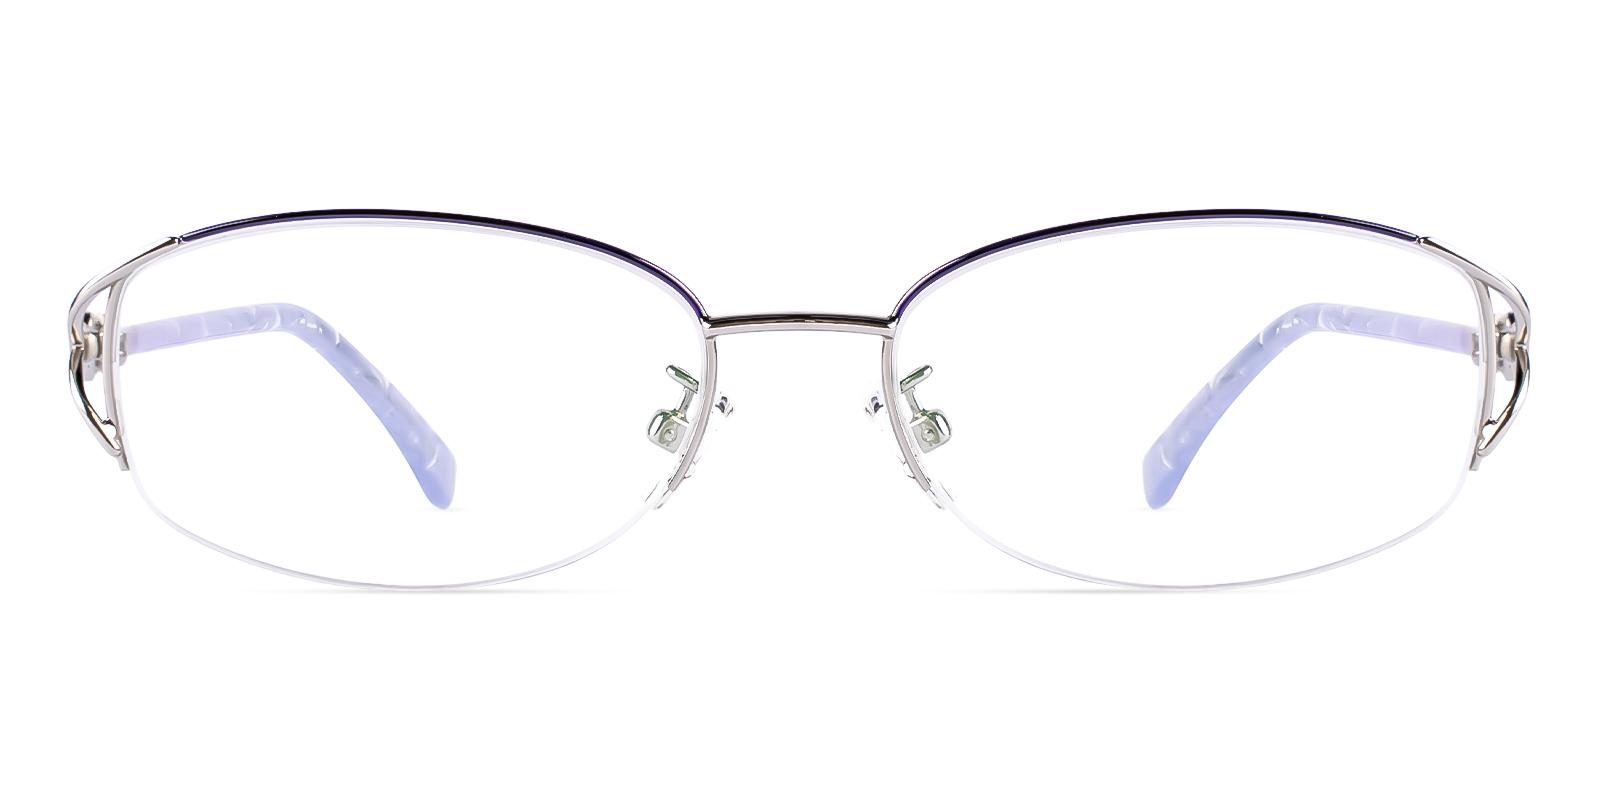 Catharics Purple Metal Eyeglasses , NosePads Frames from ABBE Glasses